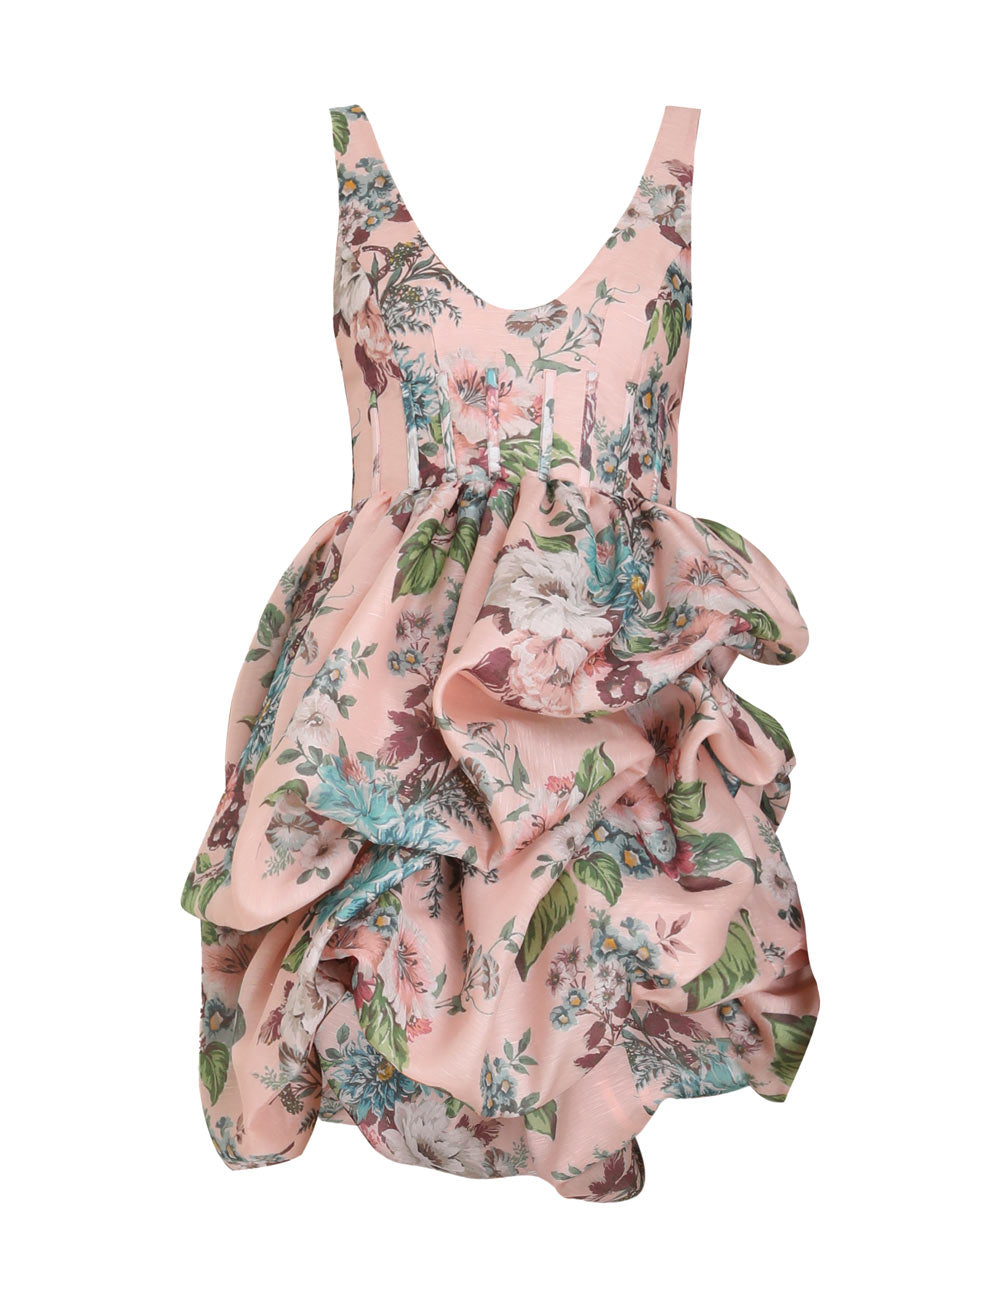 Matchmaker Drape Mini Dress (Pink Barkcloth Print)